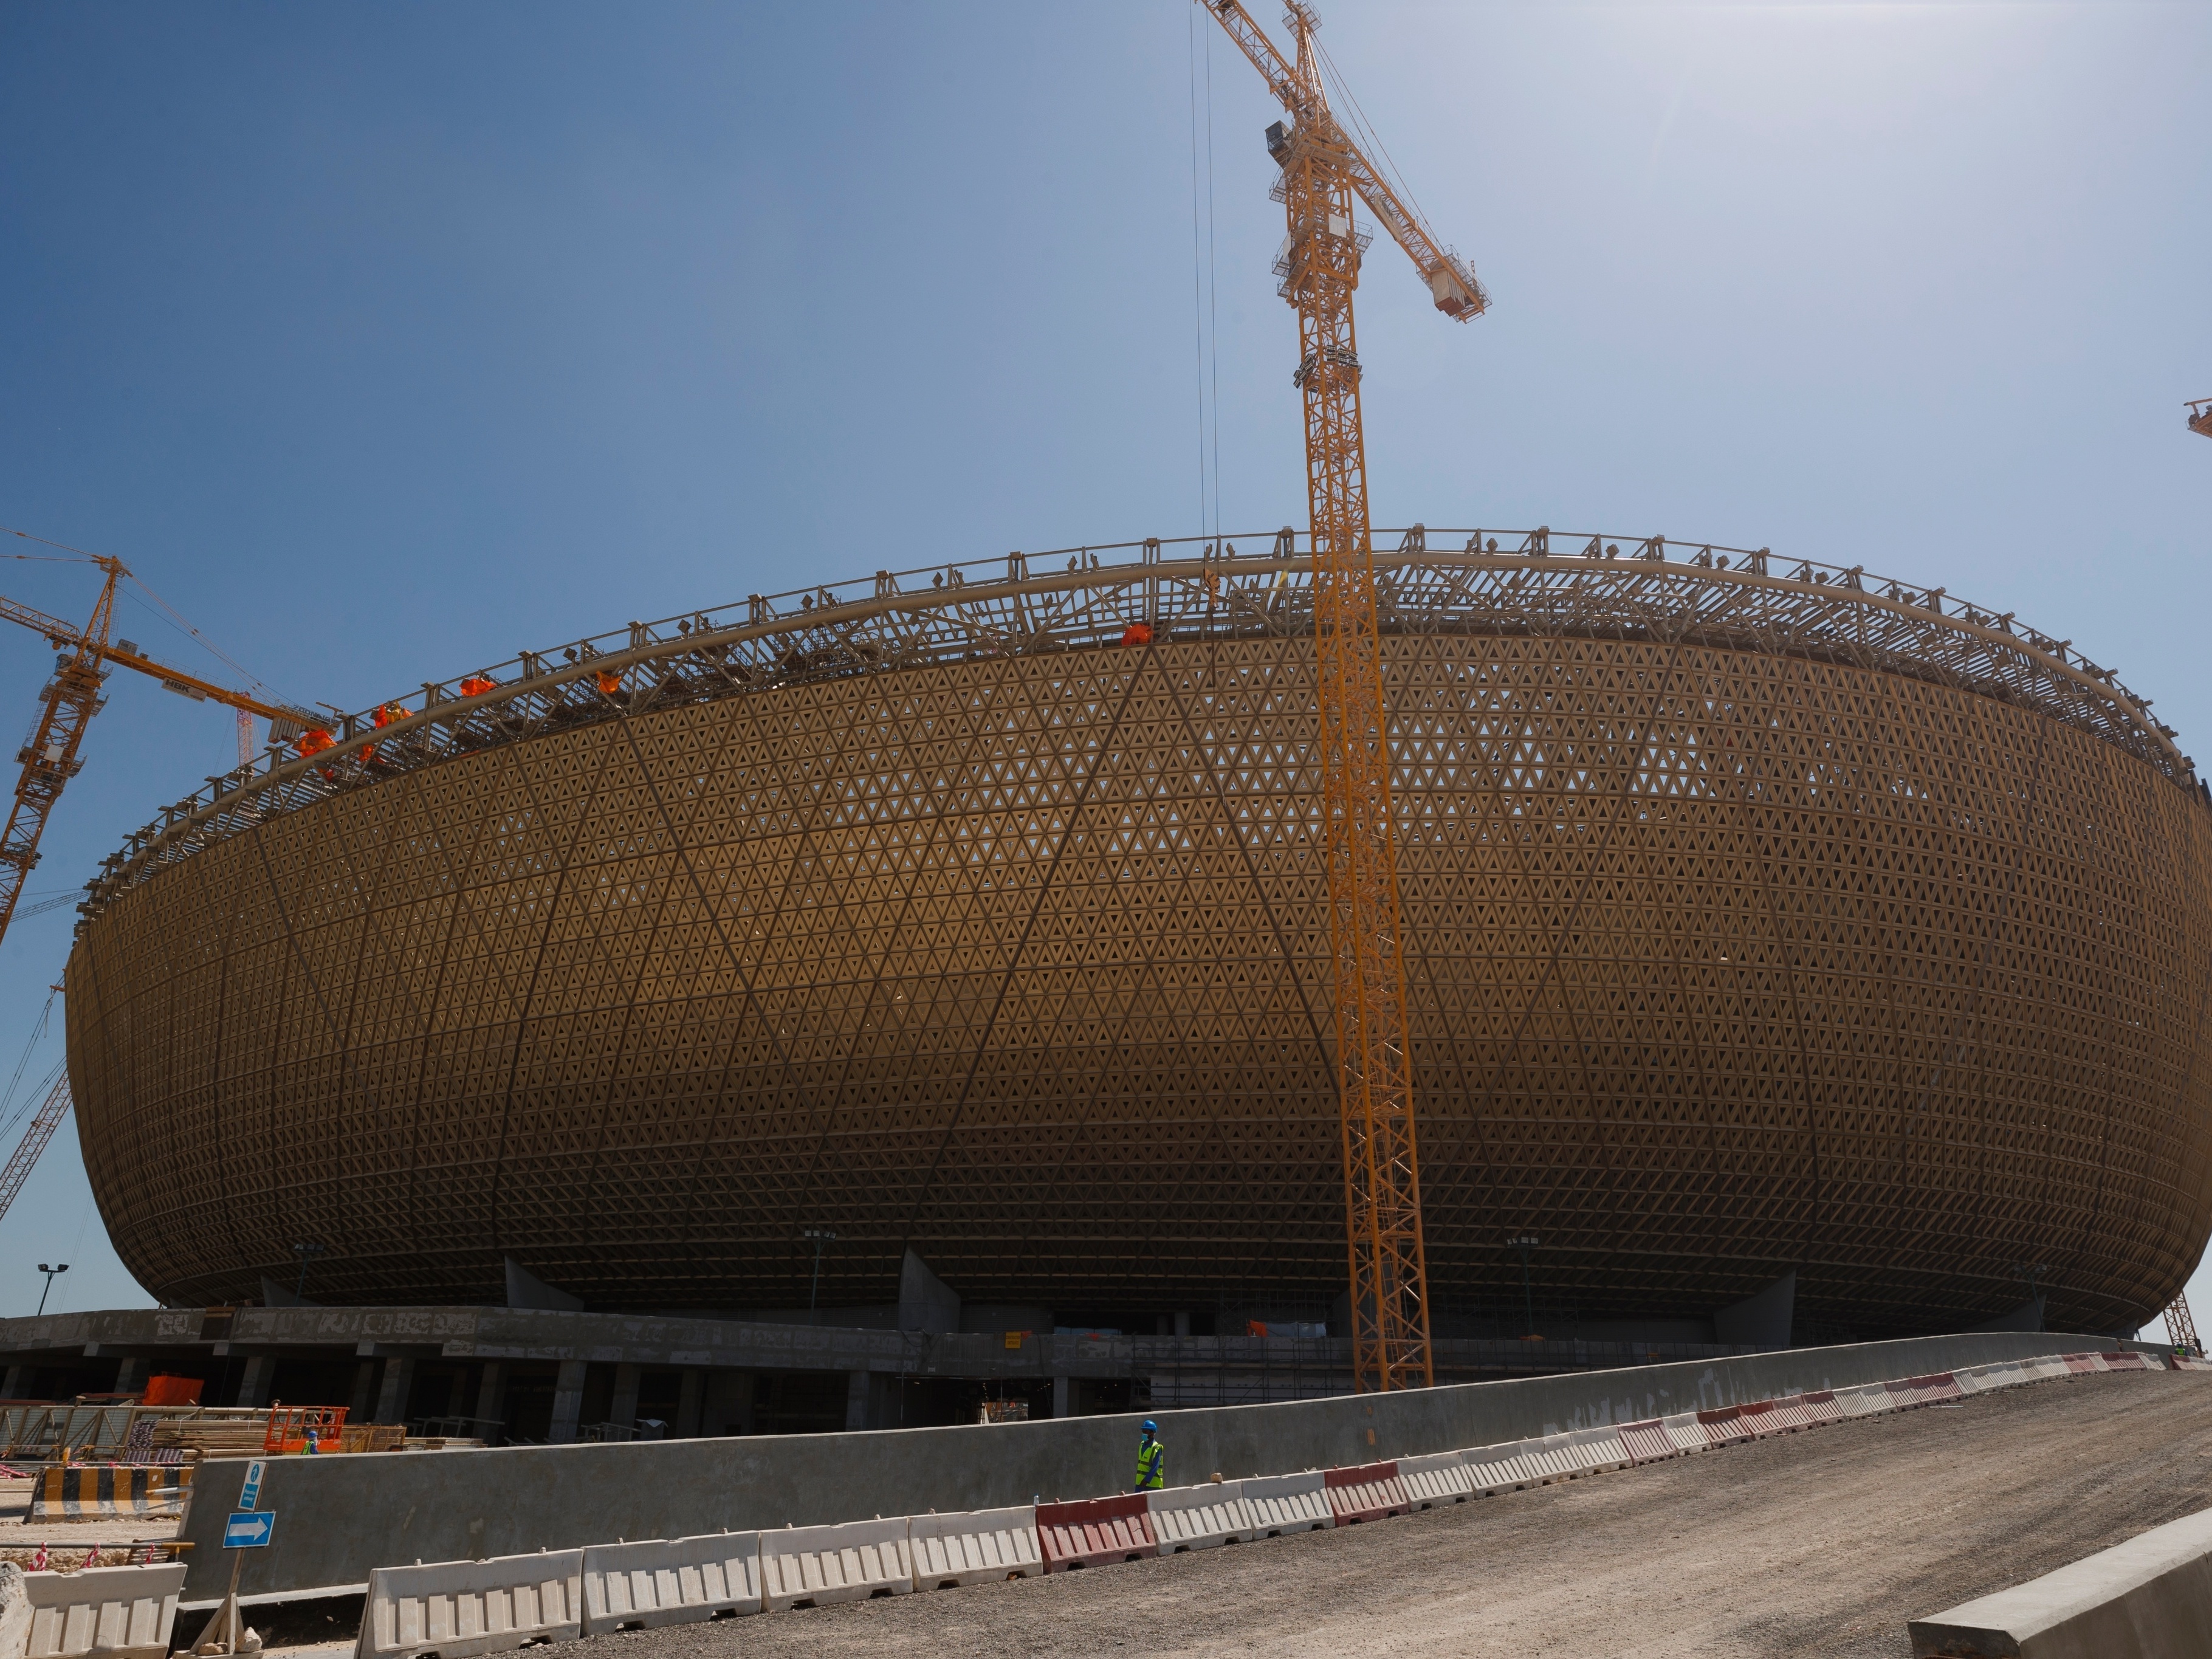 Estádio da final da Copa do Mundo do Catar construído por empresa chinesa